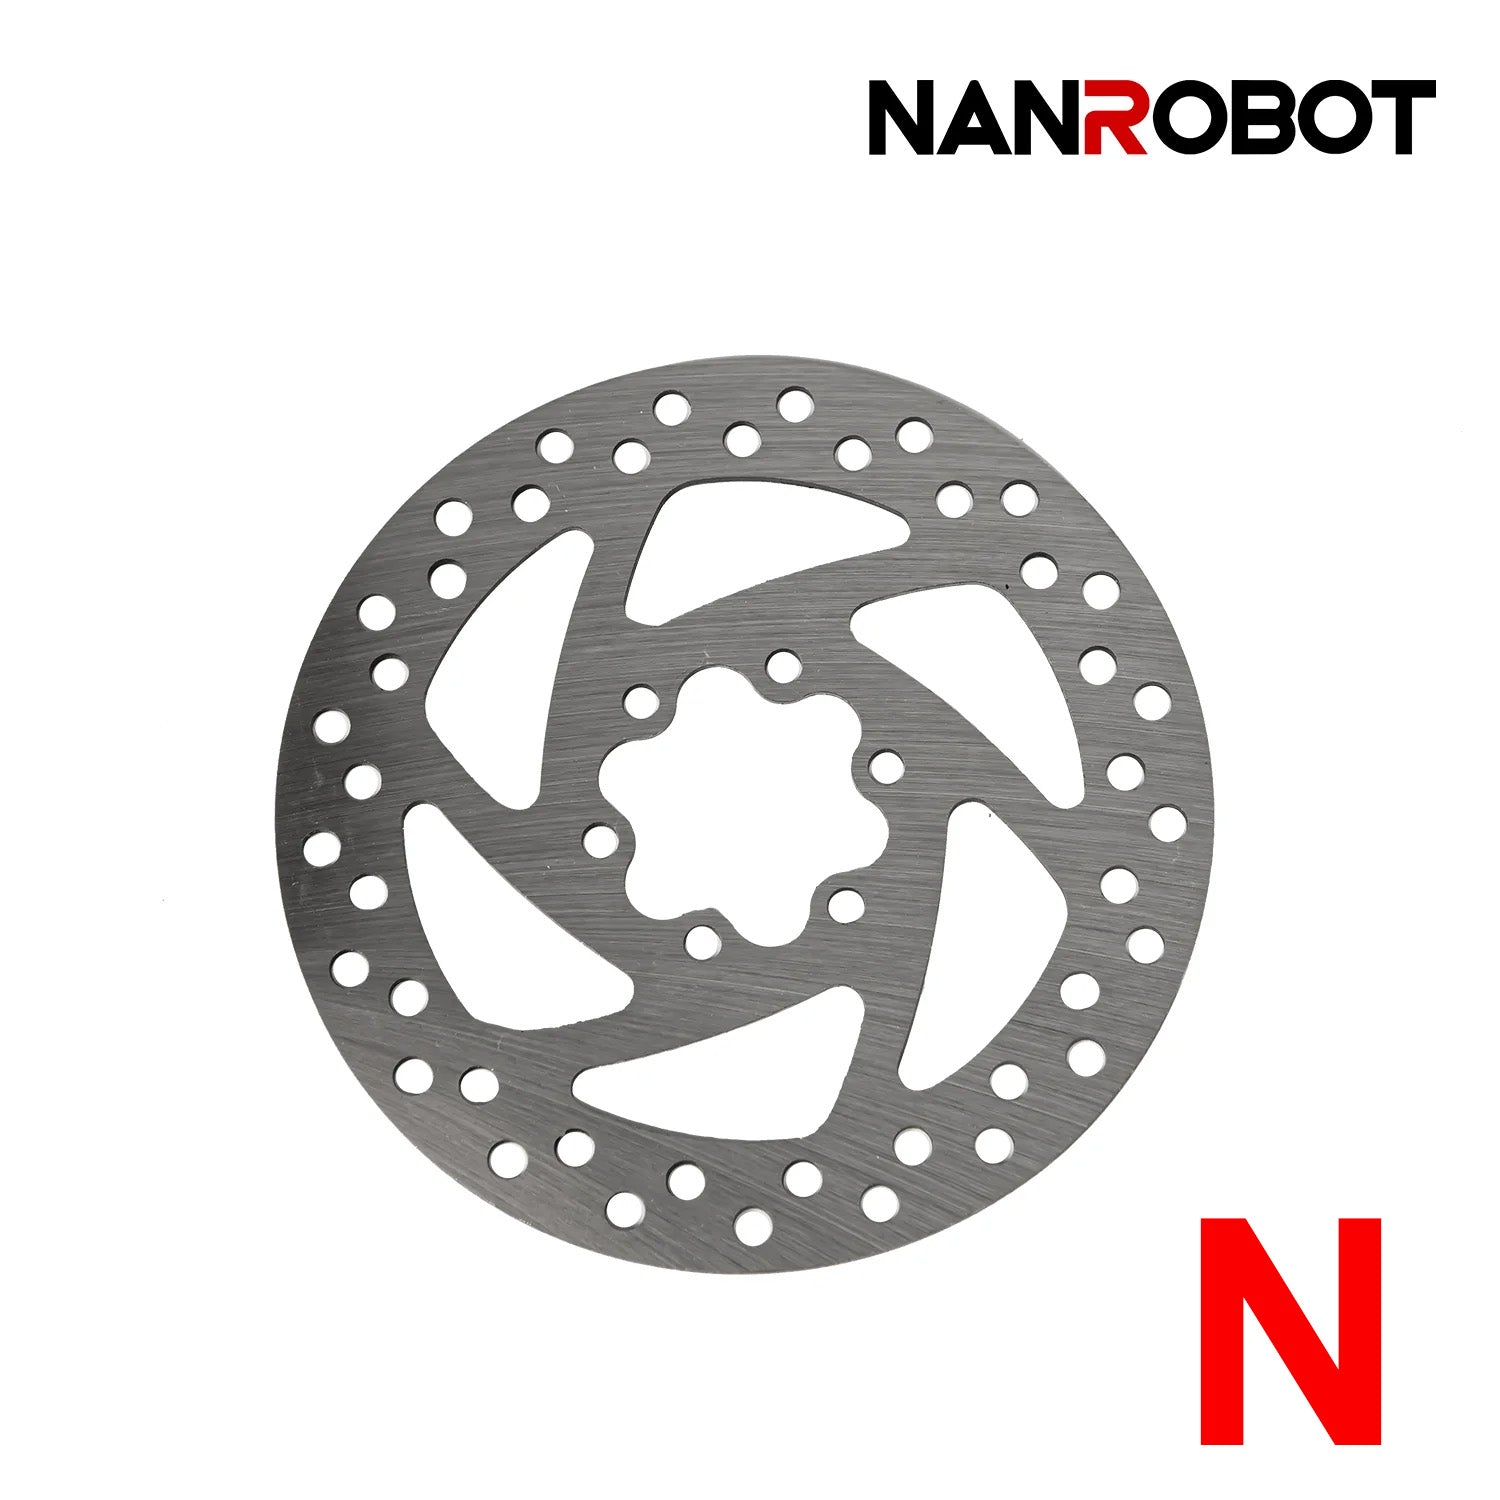 NANROBOT Electric Scooter Brake Disk - NANROBOT